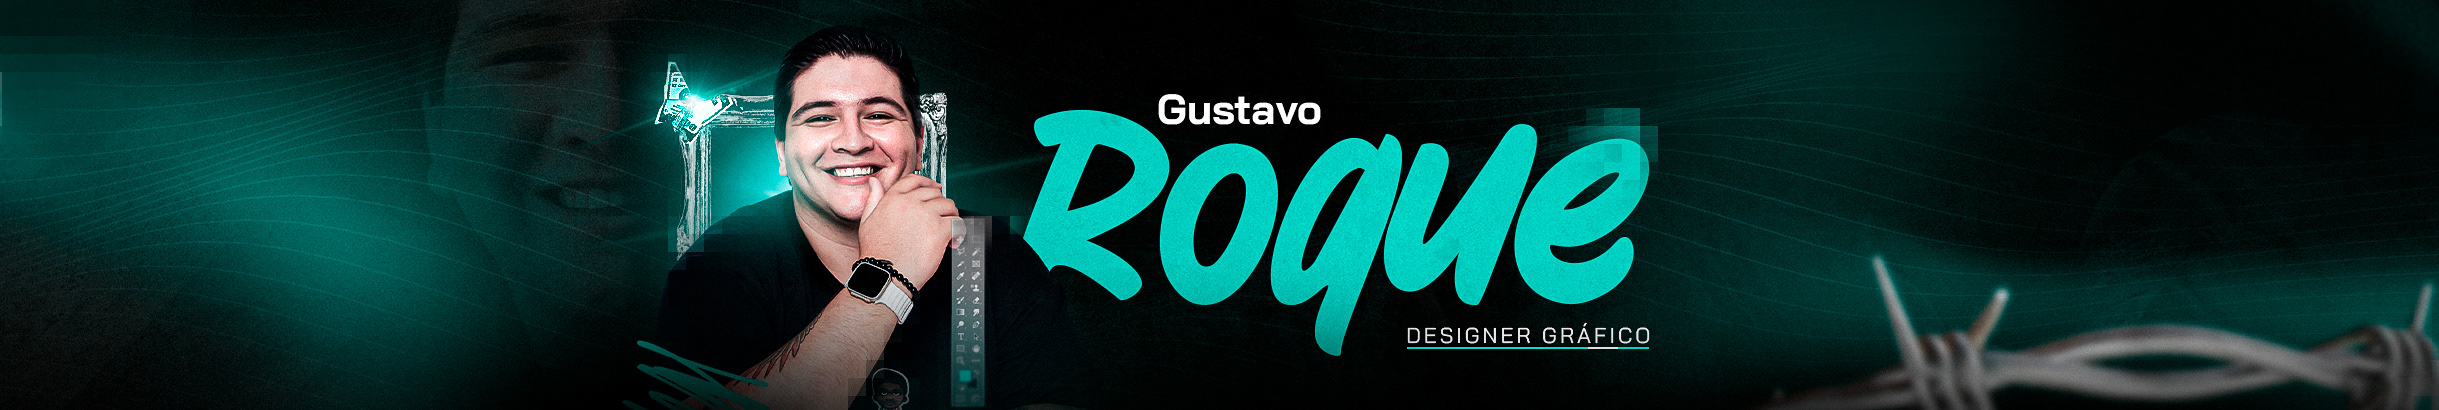 Gustavo Roques profilbanner